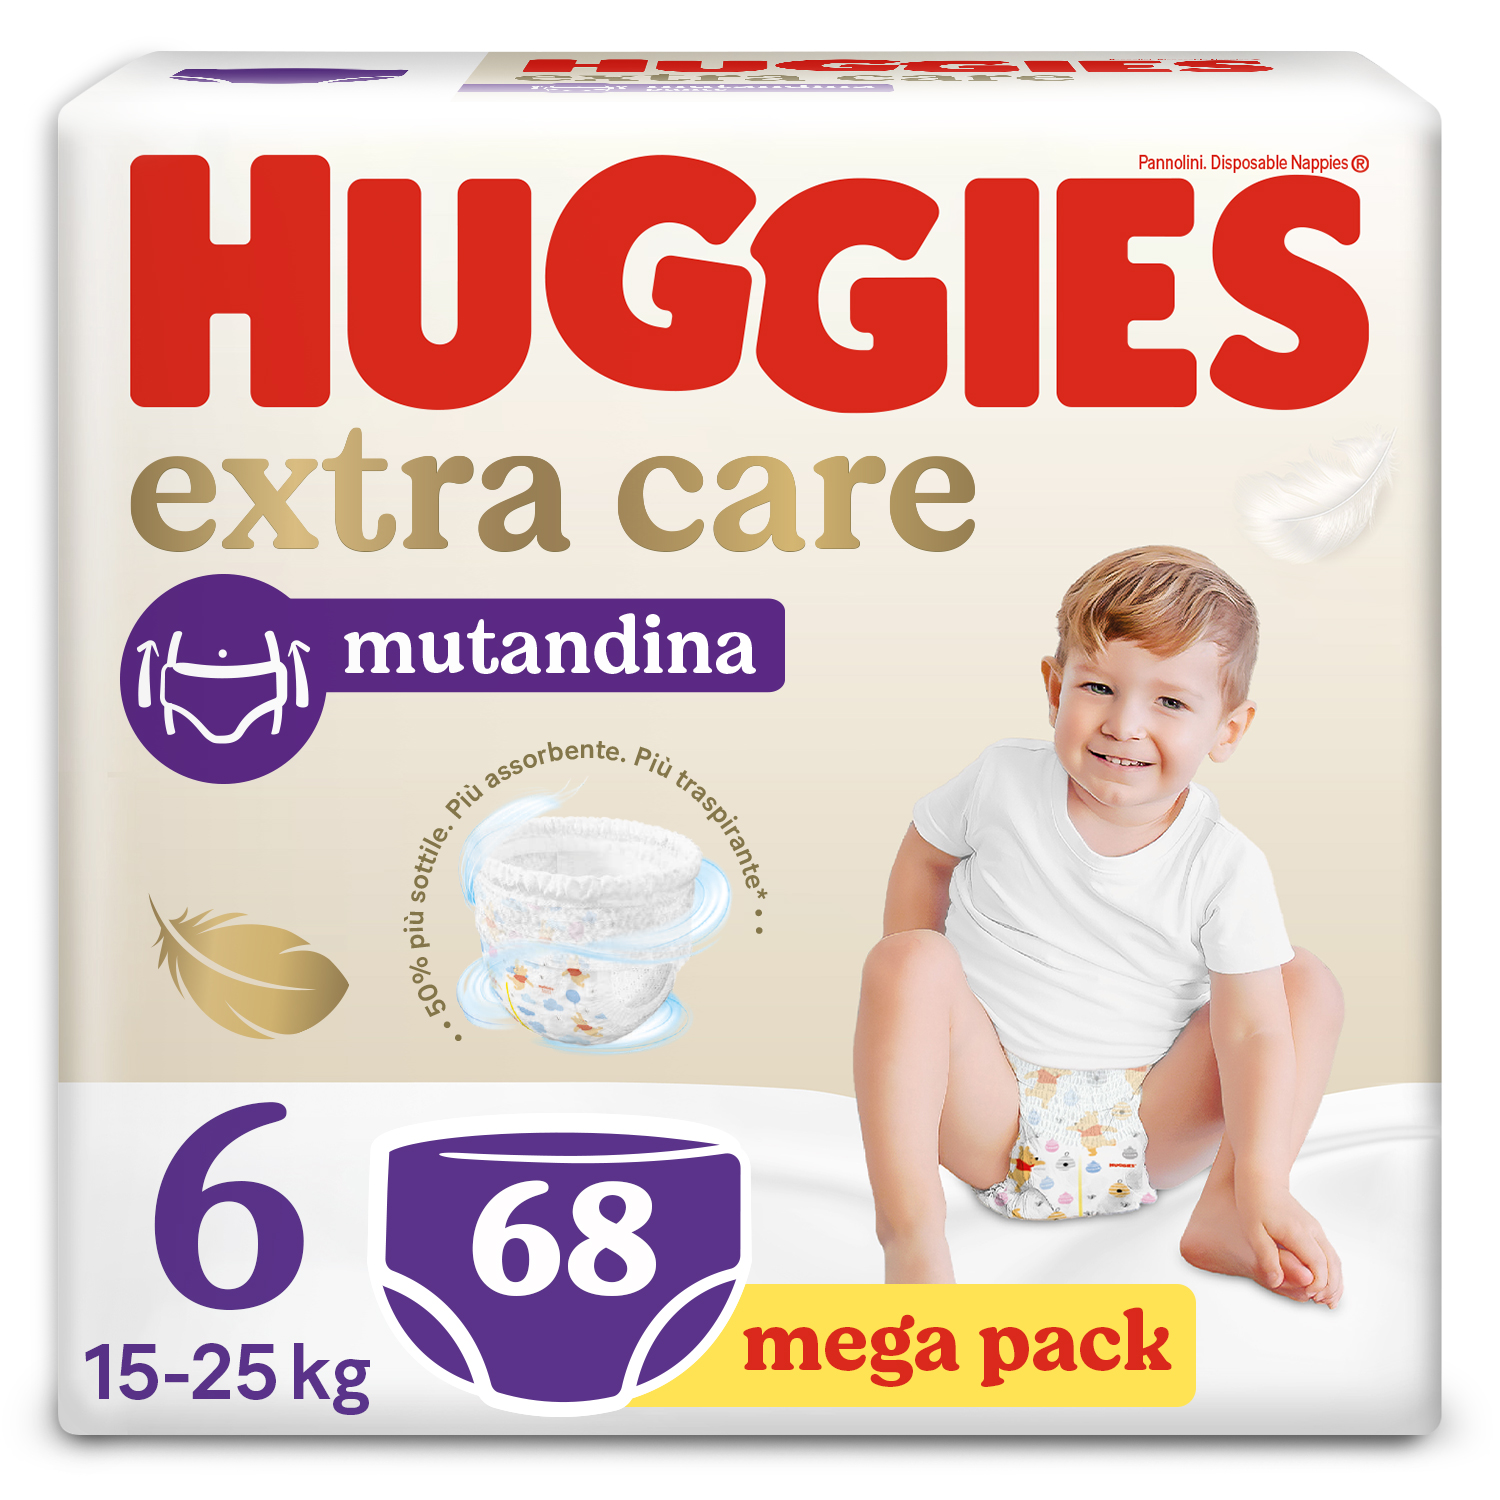 Huggies pannolini extra care mutandina mega pack tg. 6 (15-25 kg), 68 pannolini - Huggies